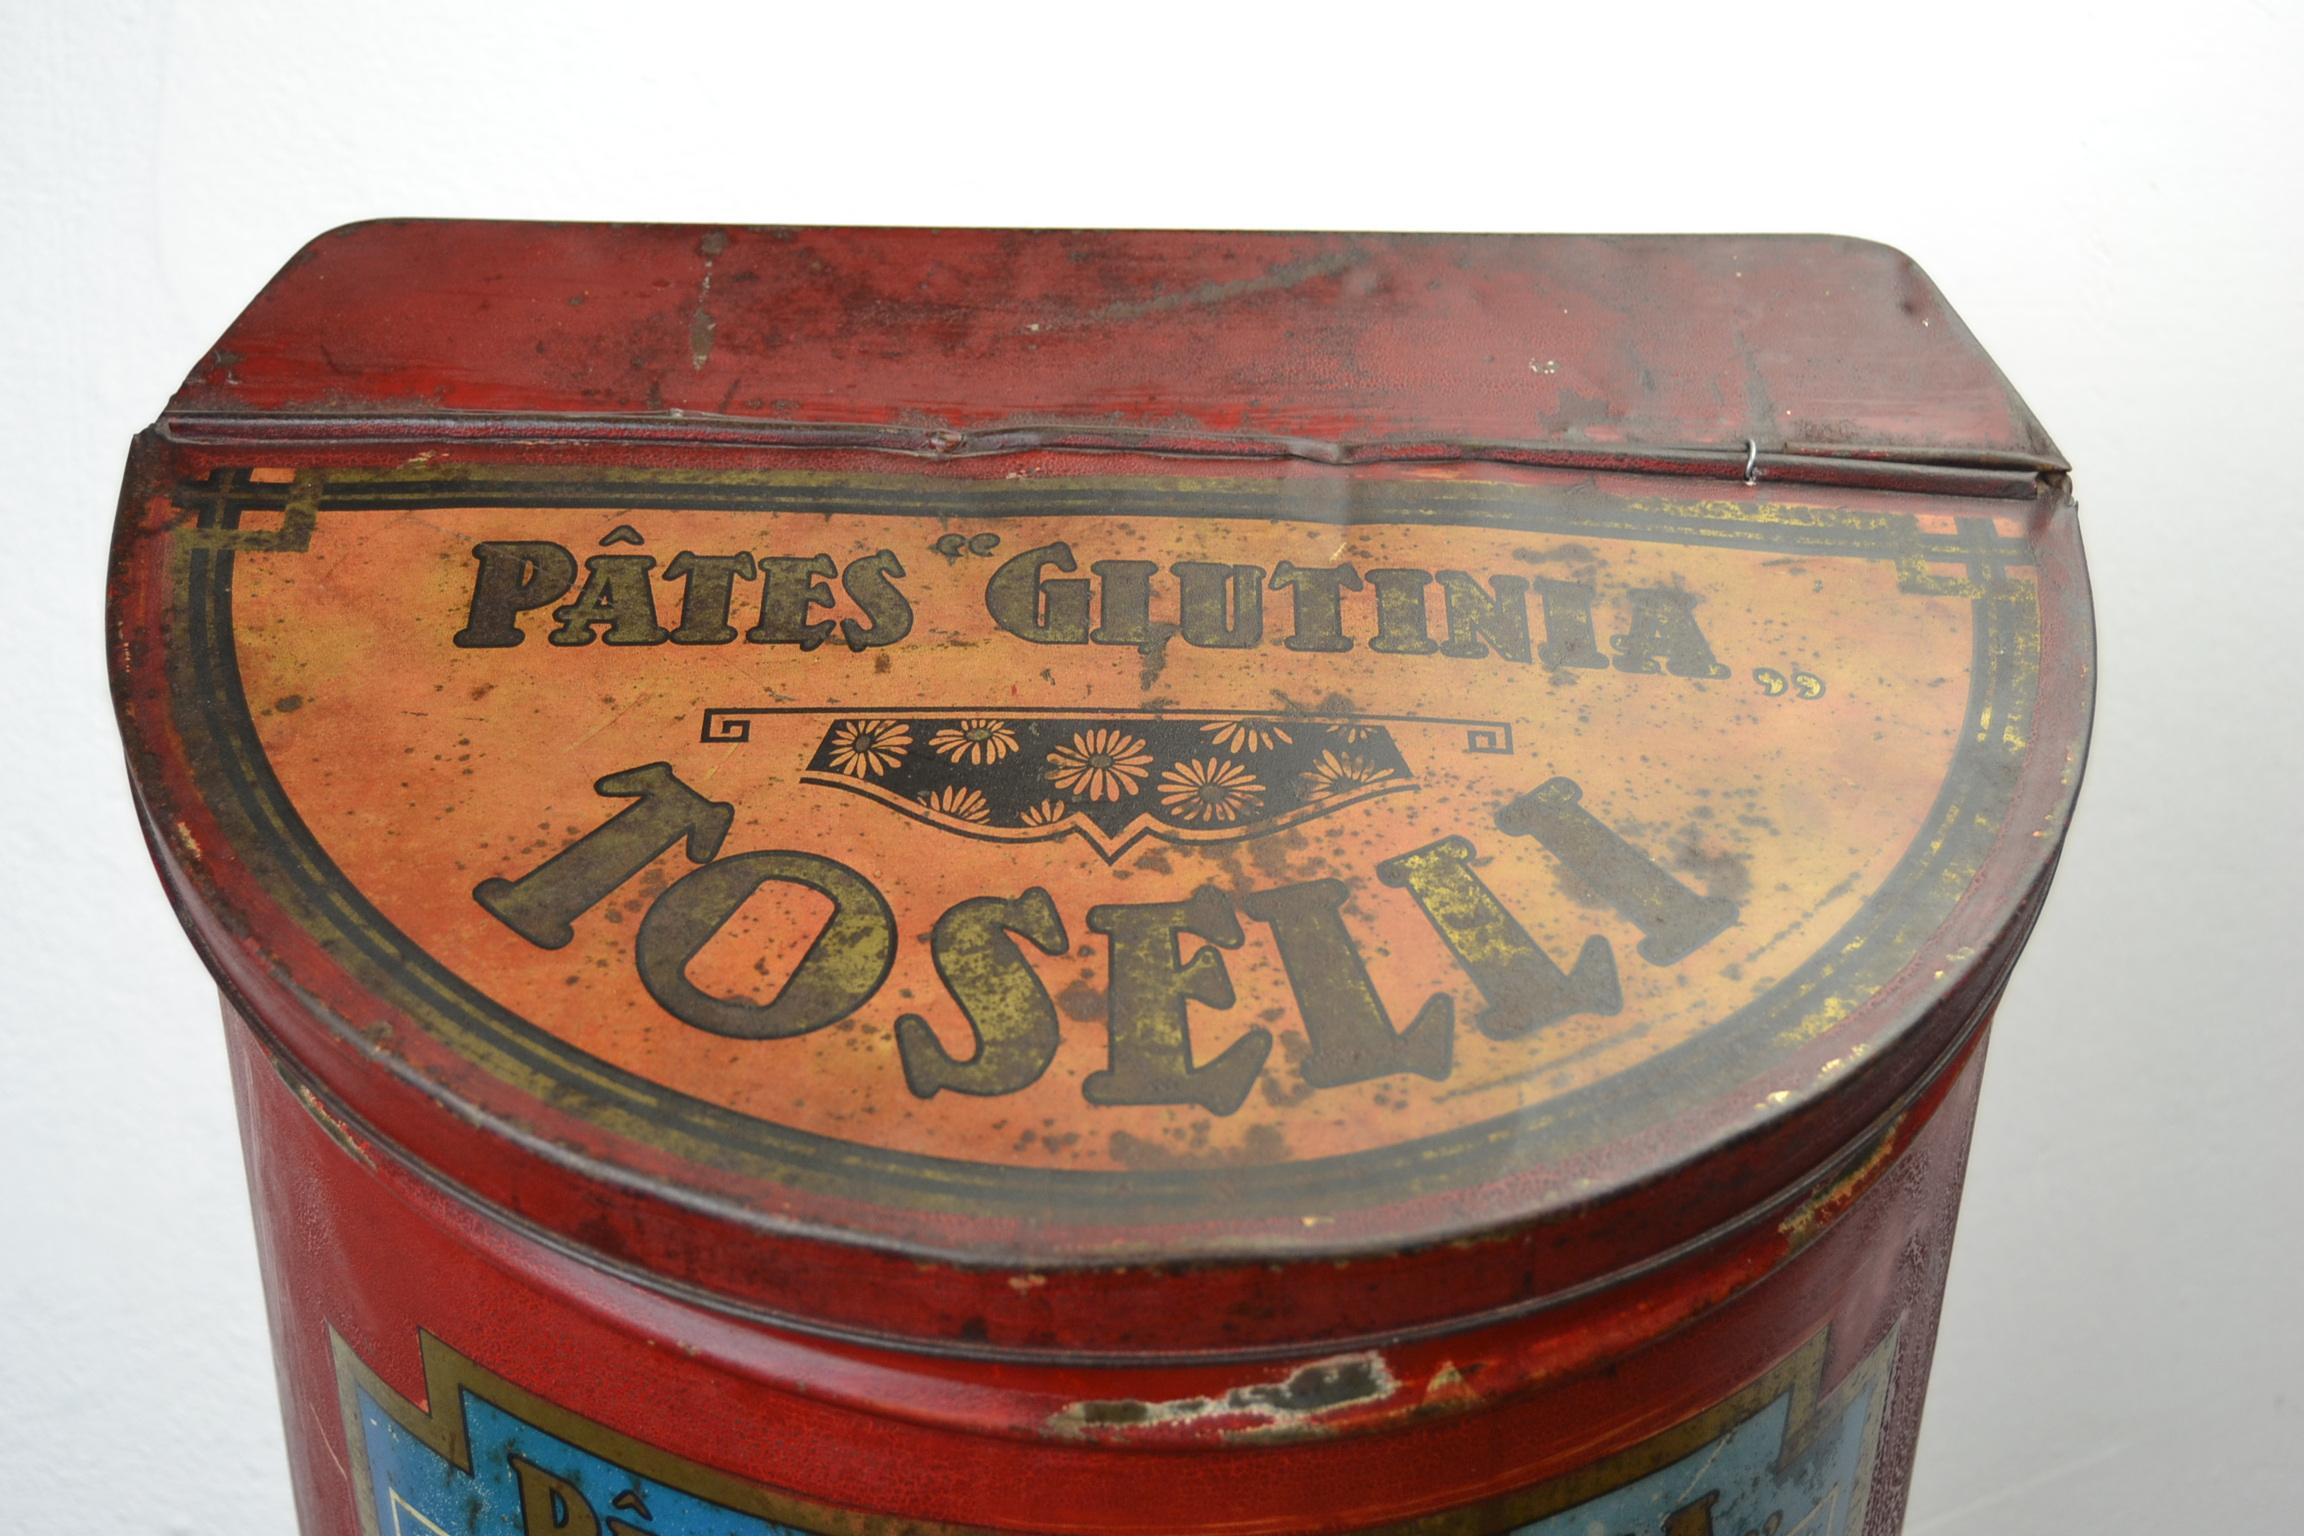 Belgian Antique Tin for Pasta Toselli, Italy, Belgium For Sale